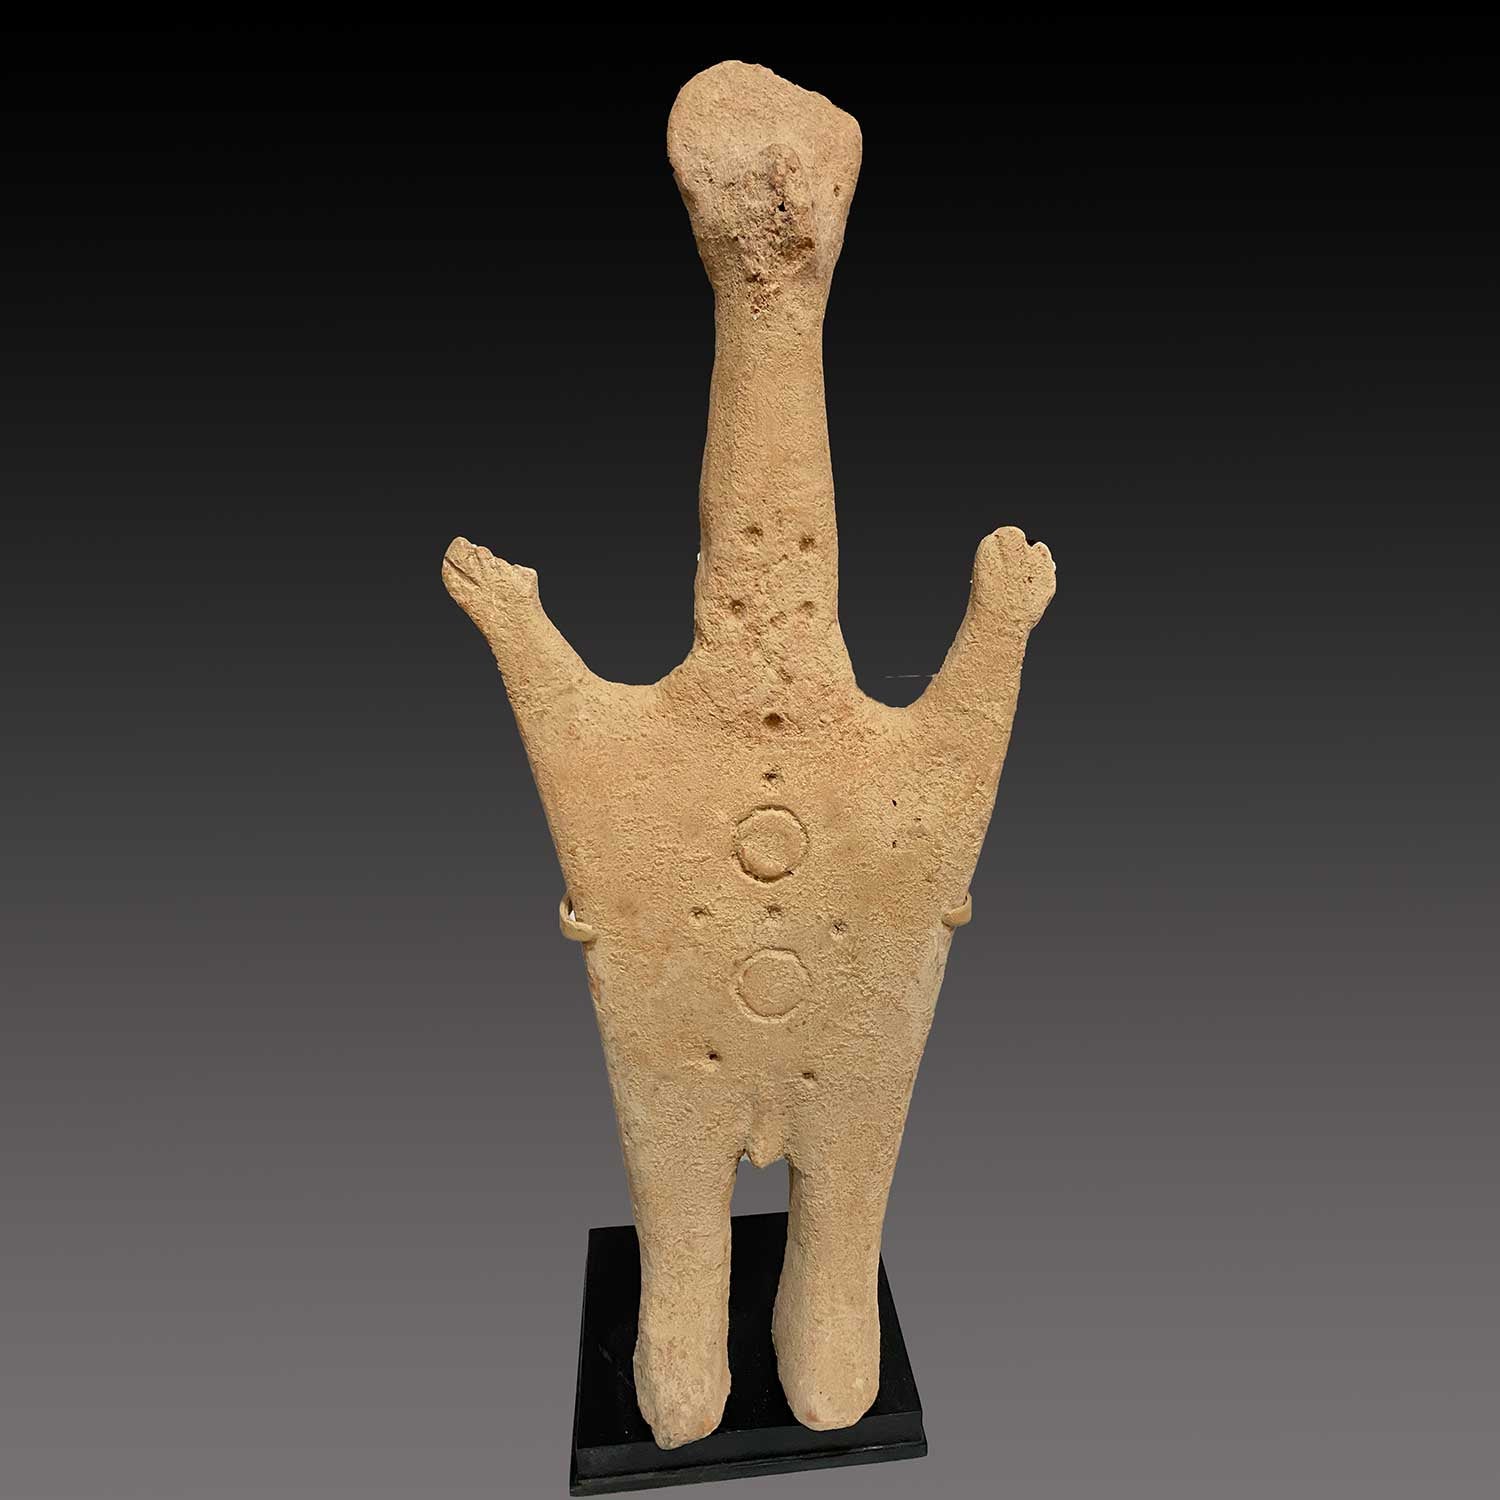 A Mesopotamian Terracotta Male Statue, ca. early first millennium BCE